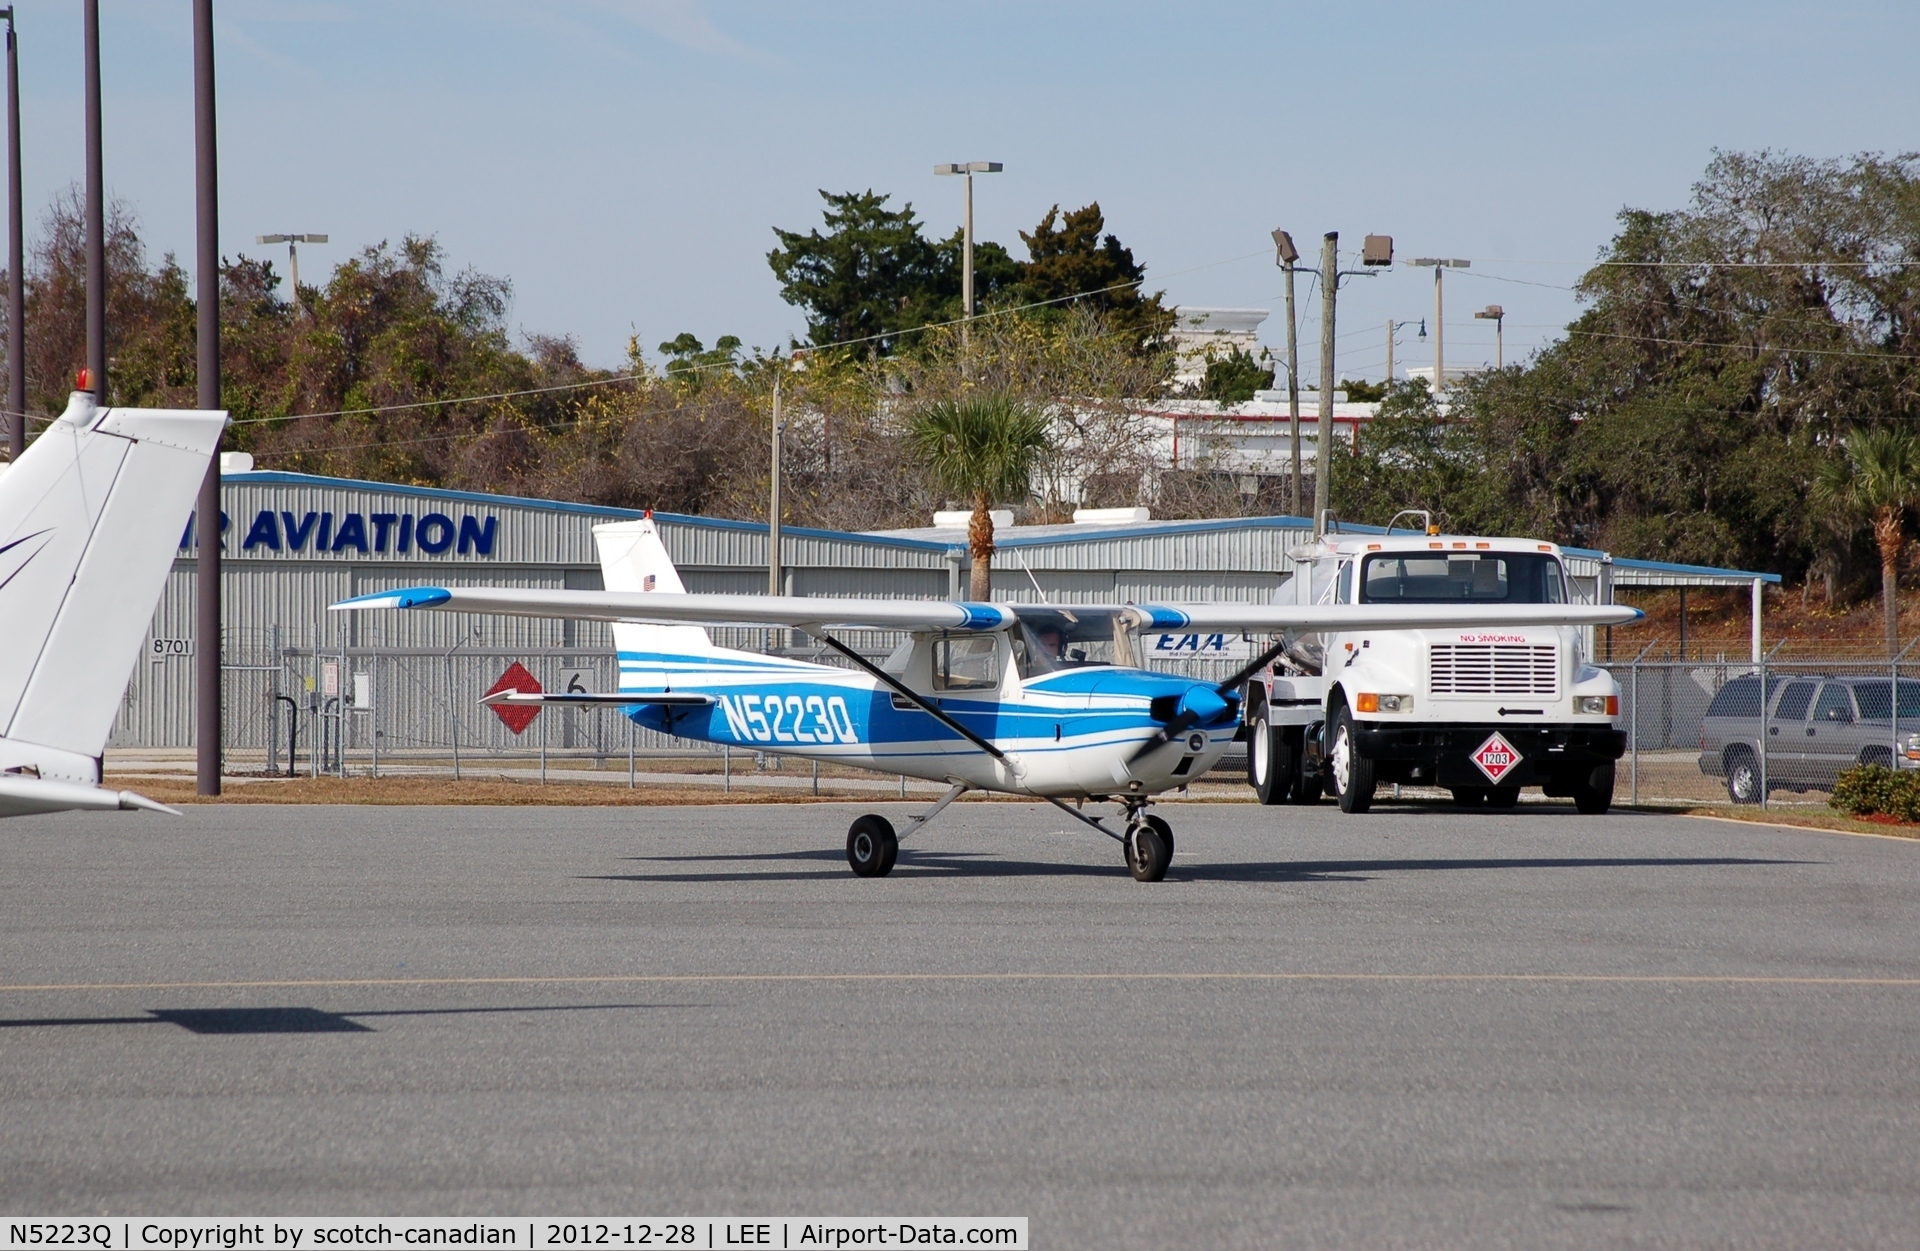 N5223Q, 1971 Cessna 150L C/N 15073123, 1971 Cessna 150L, N5223Q, at Leesburg International Airport, Leesburg, FL